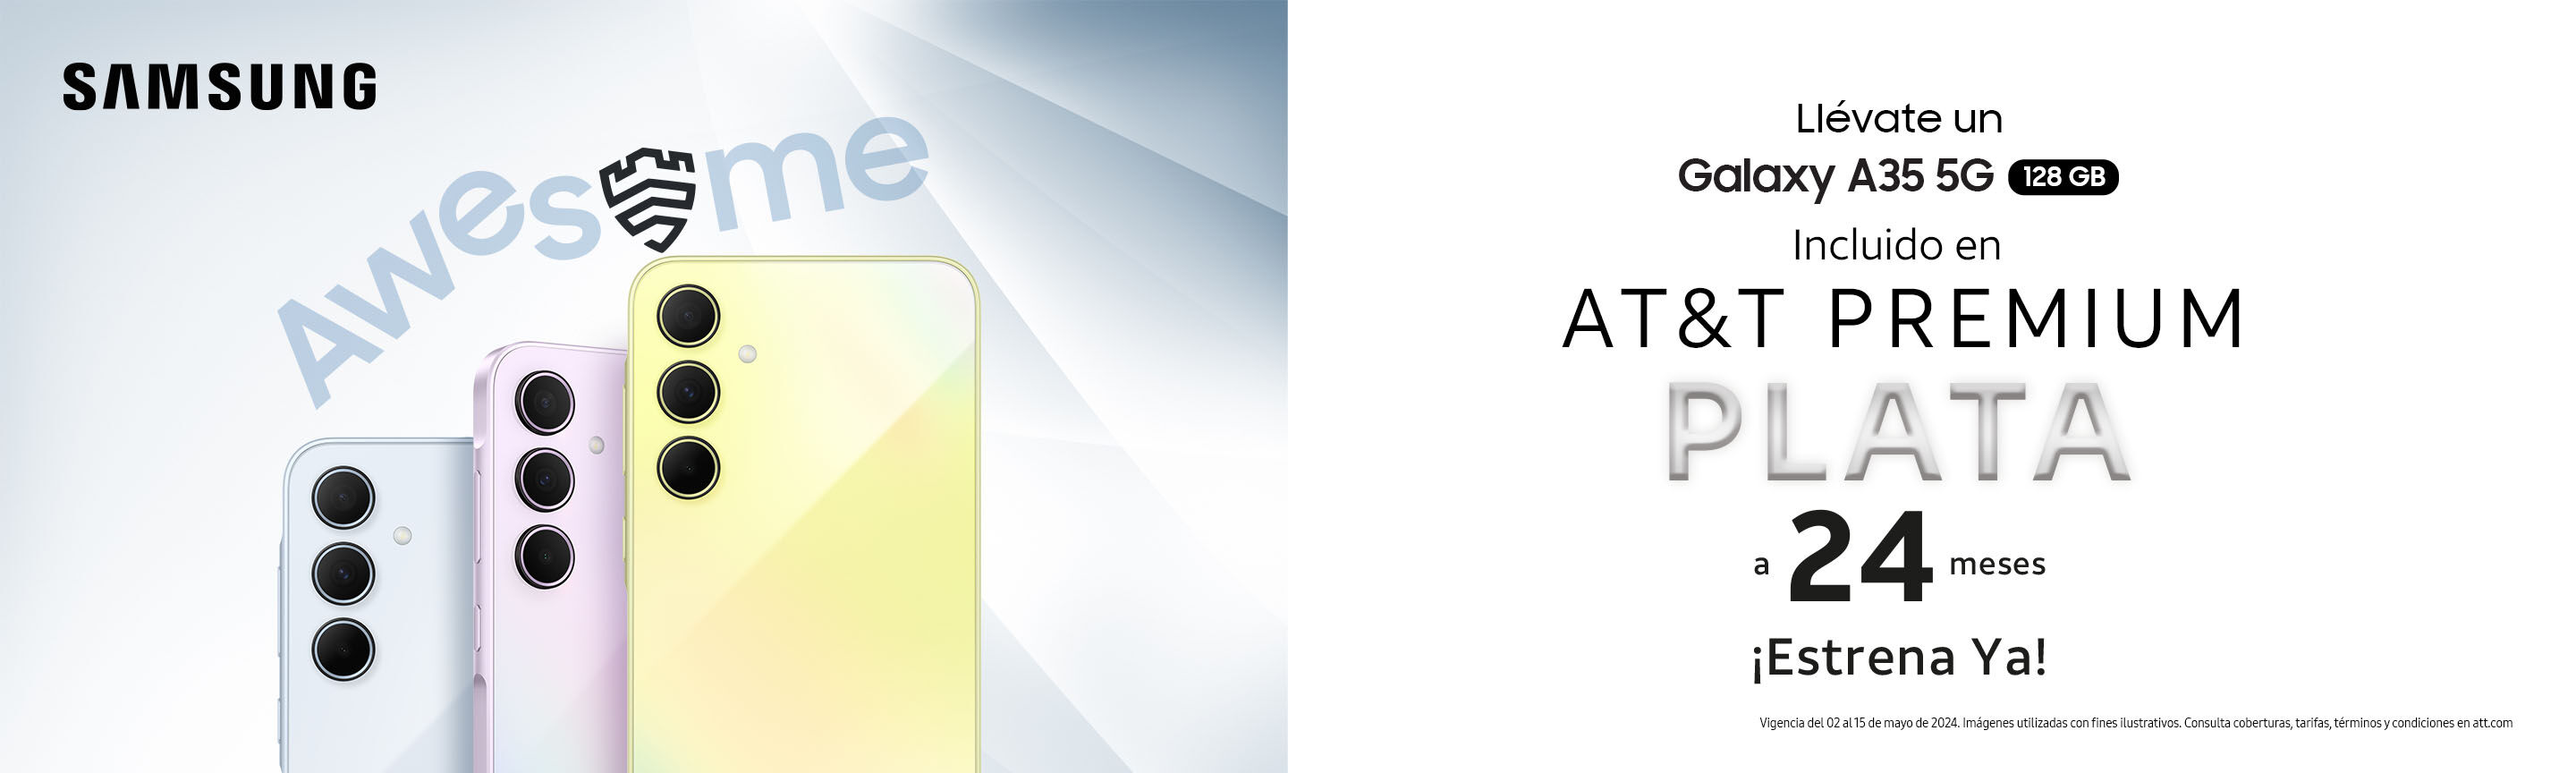 SAMSUNG Galaxy A55 | A35 5G, desde $123 al mes